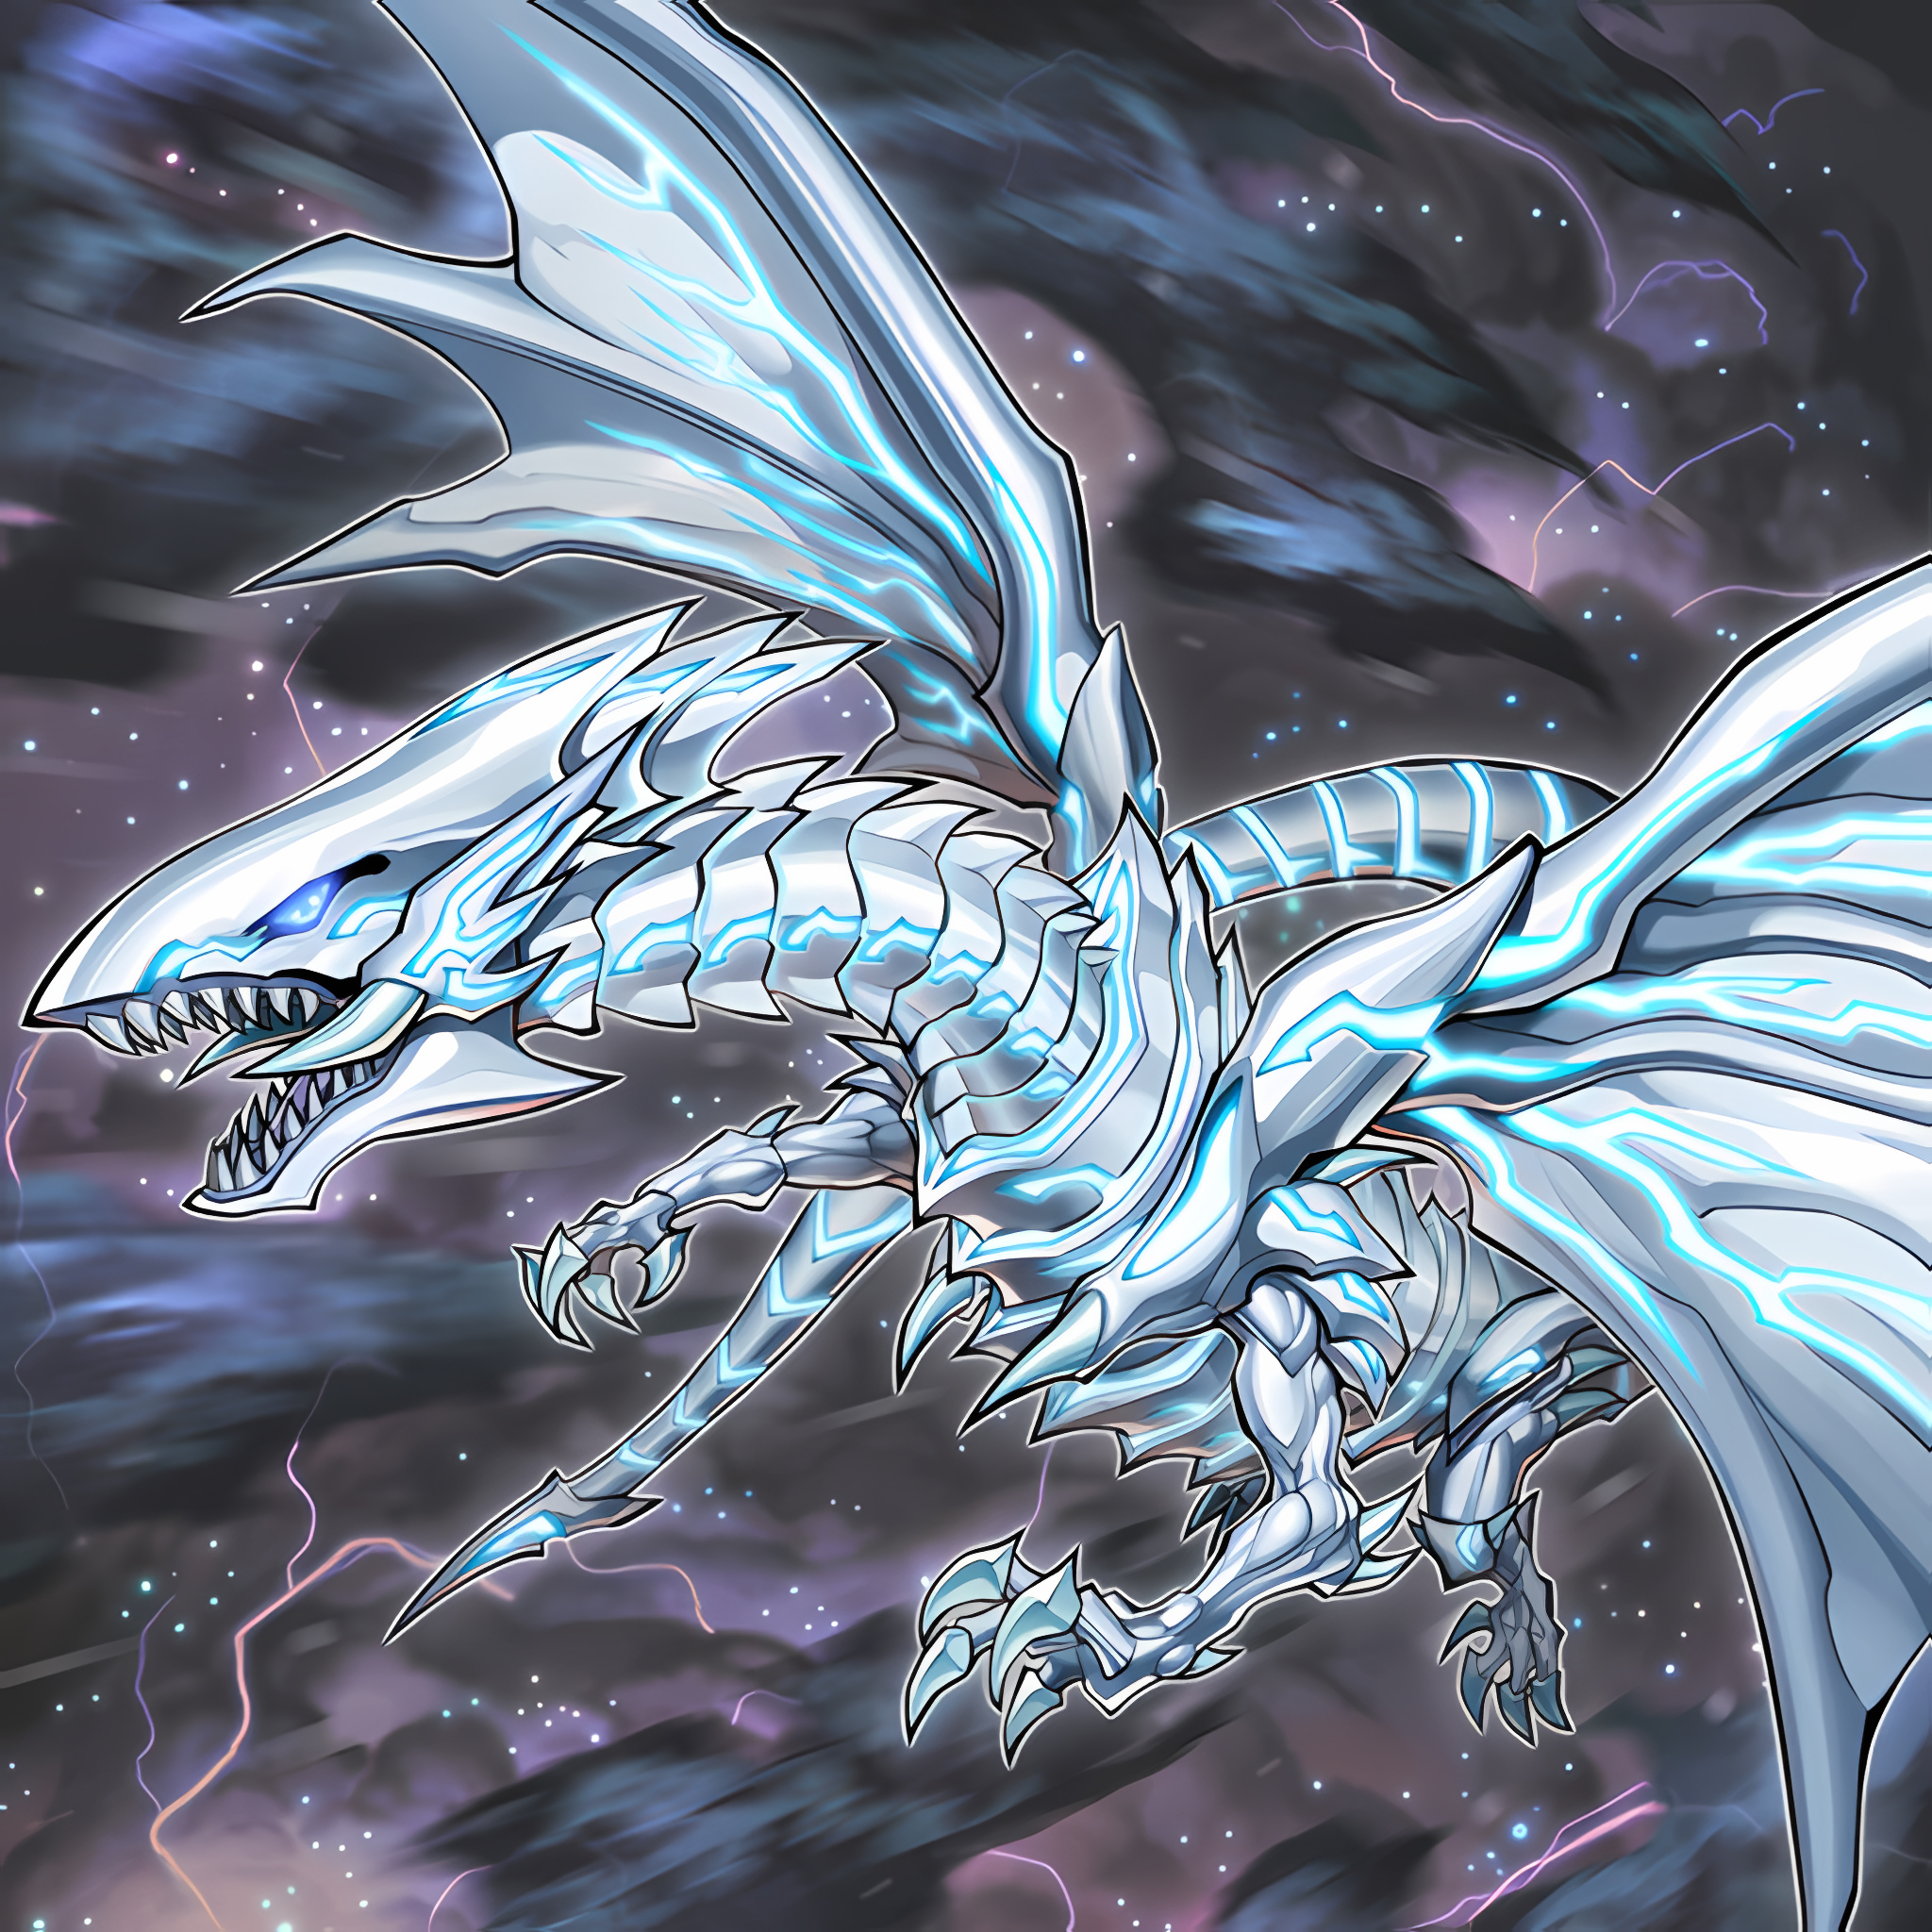 Blue-Eyes White Dragon (Alternate Art) by serenade87 on DeviantArt